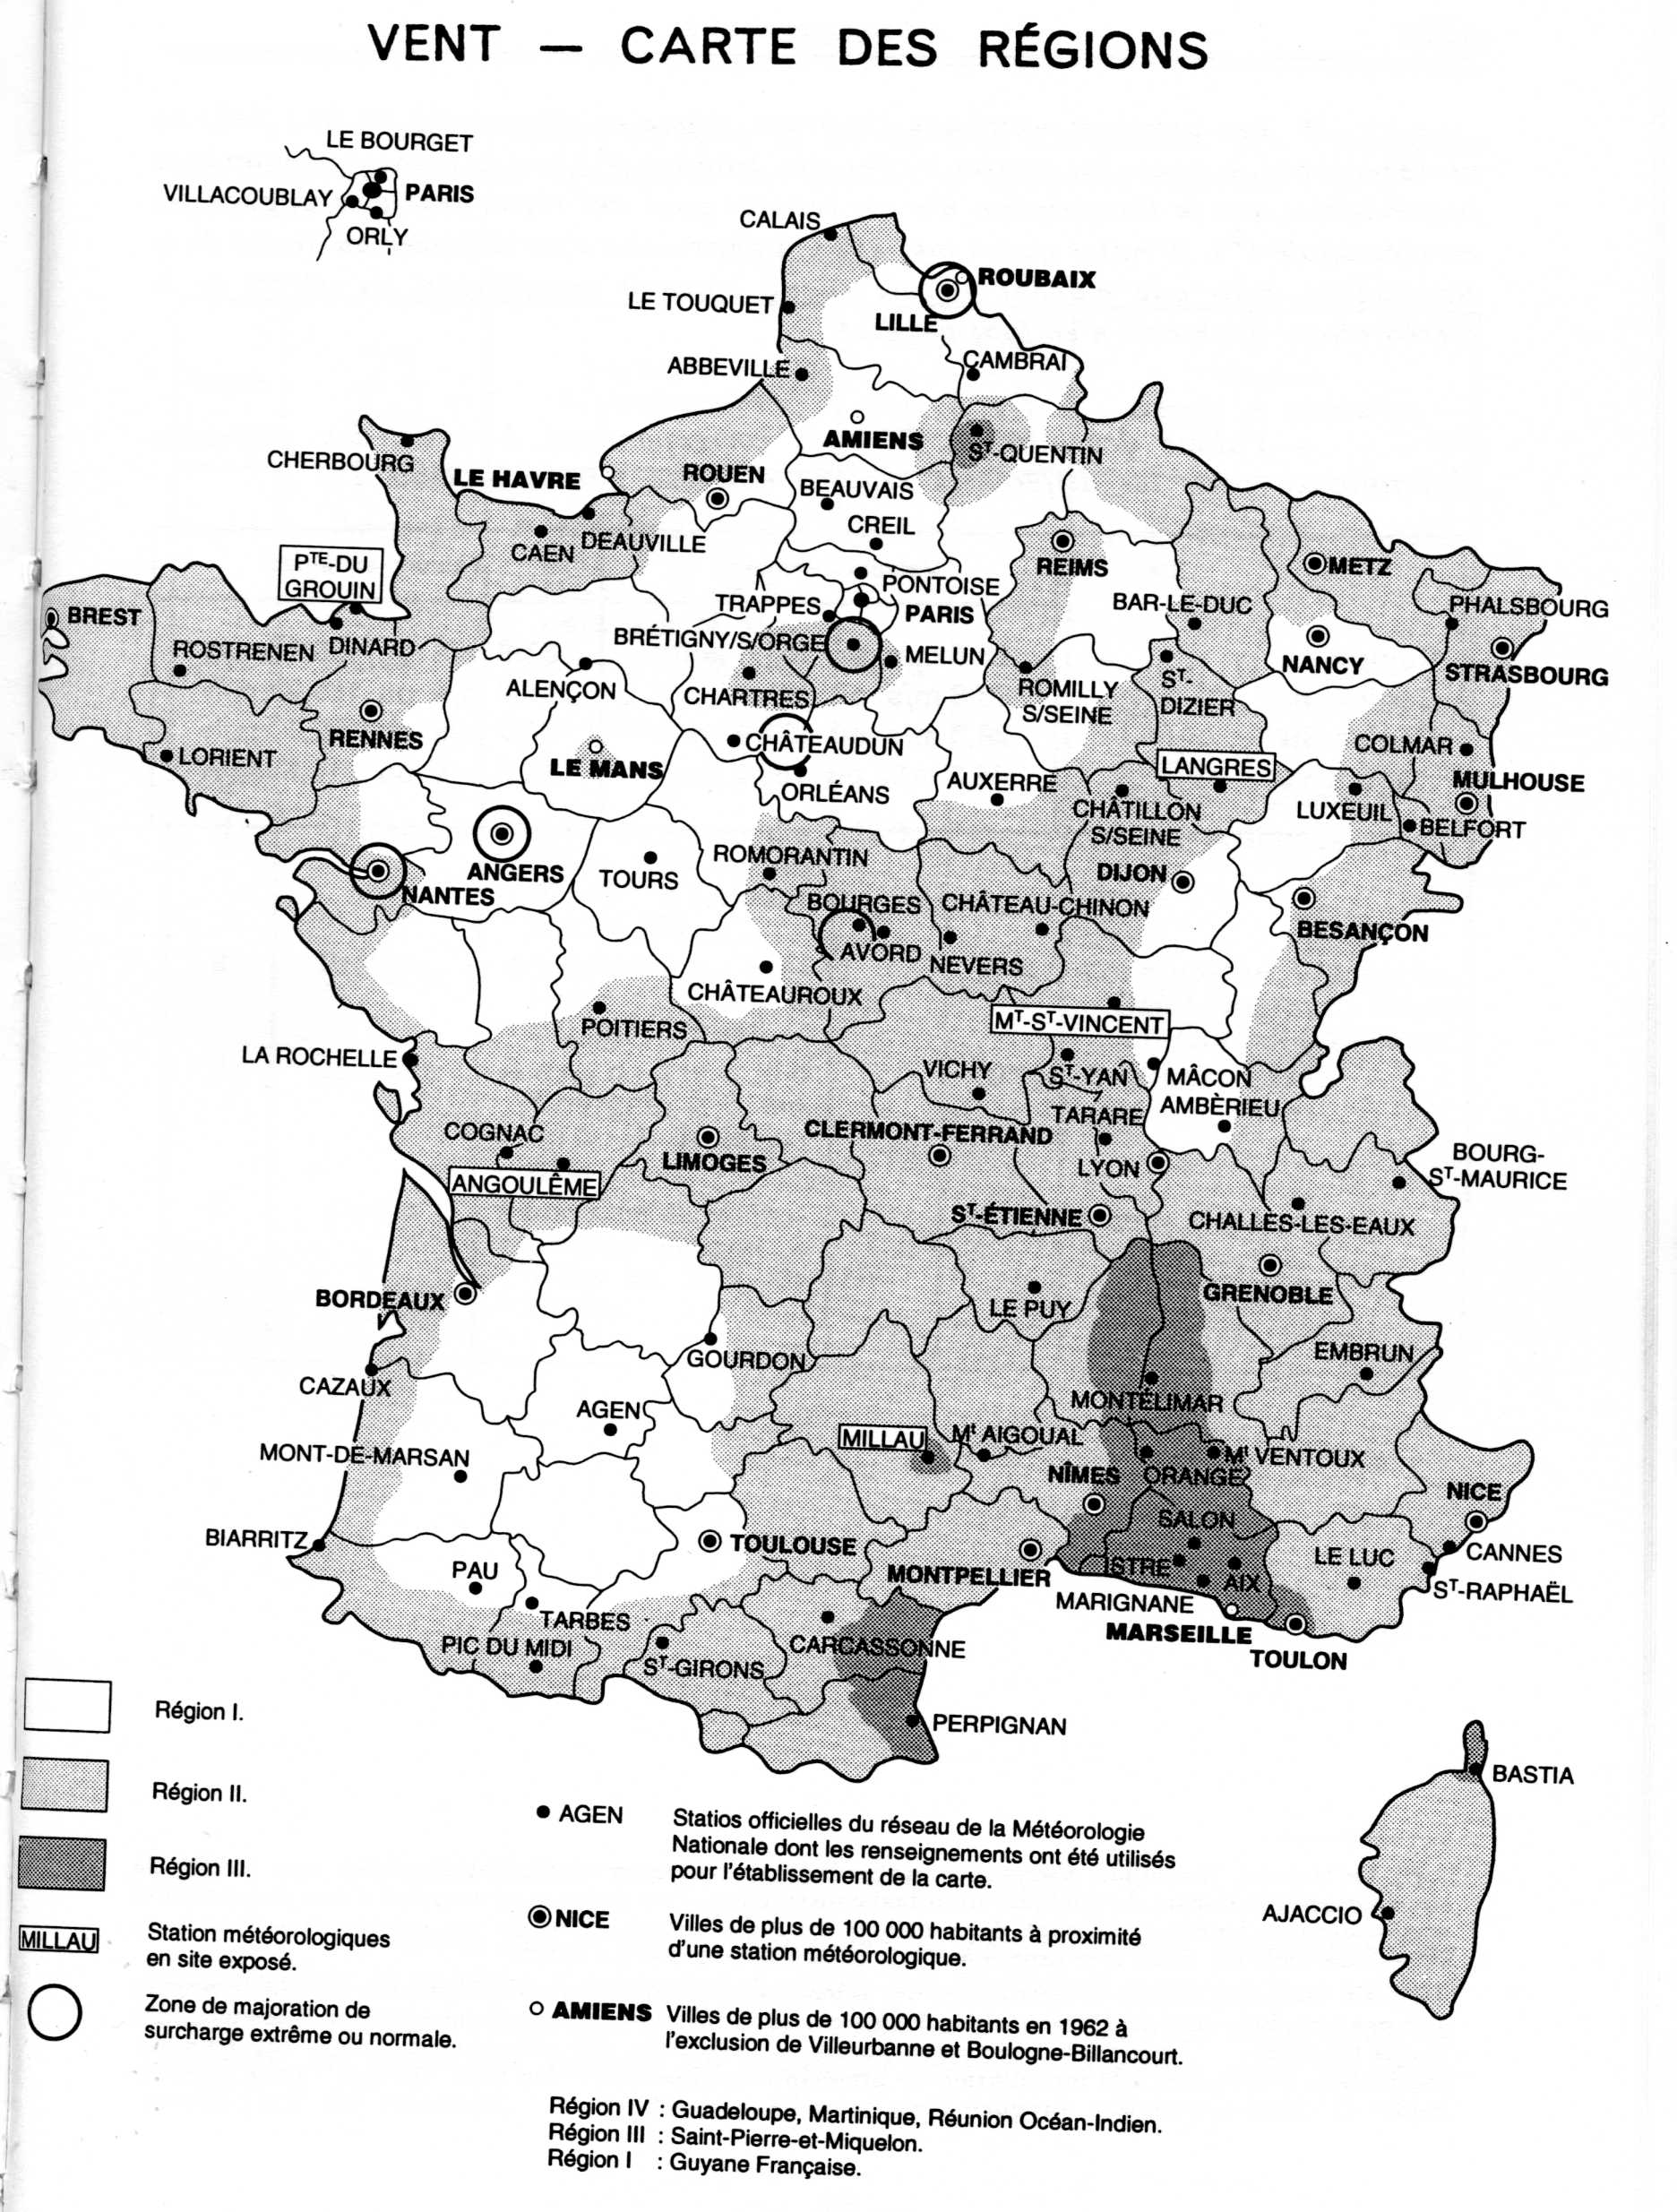 NV65 1965 zones de vent en France